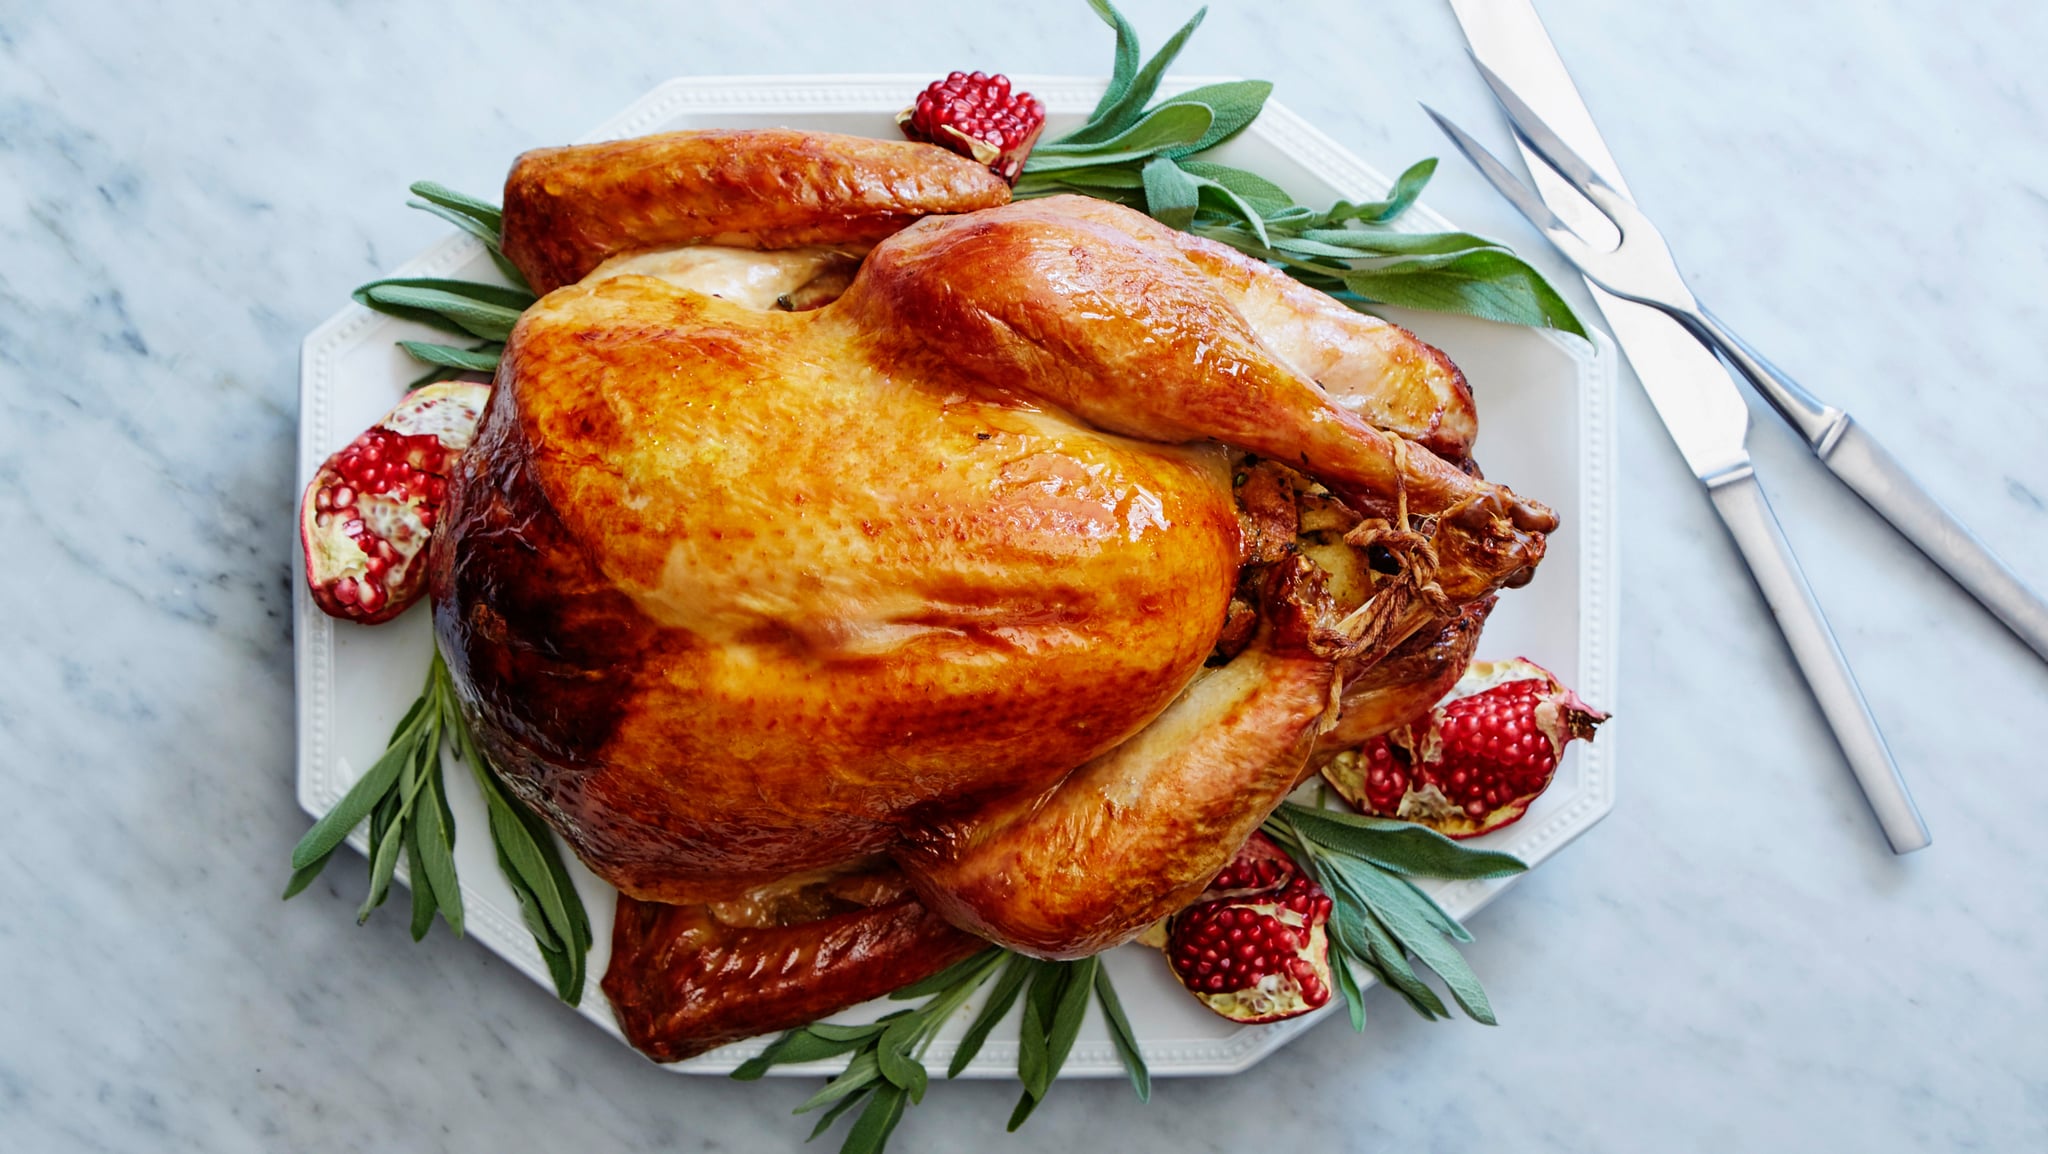 Thanksgiving Turkey